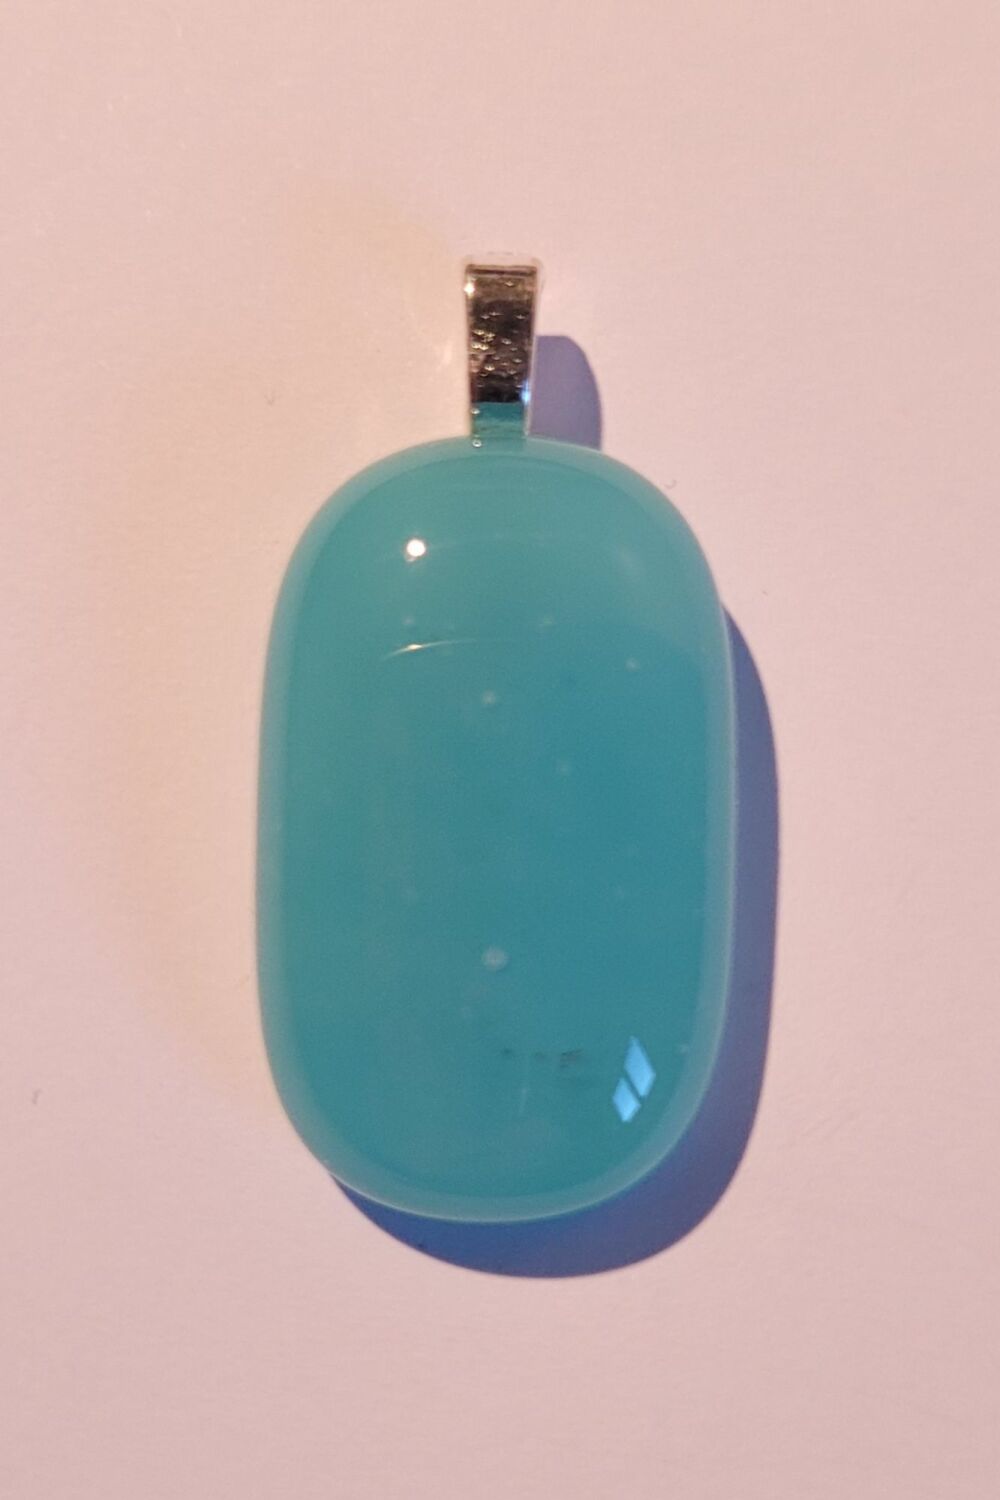 Turquoise glass pendant